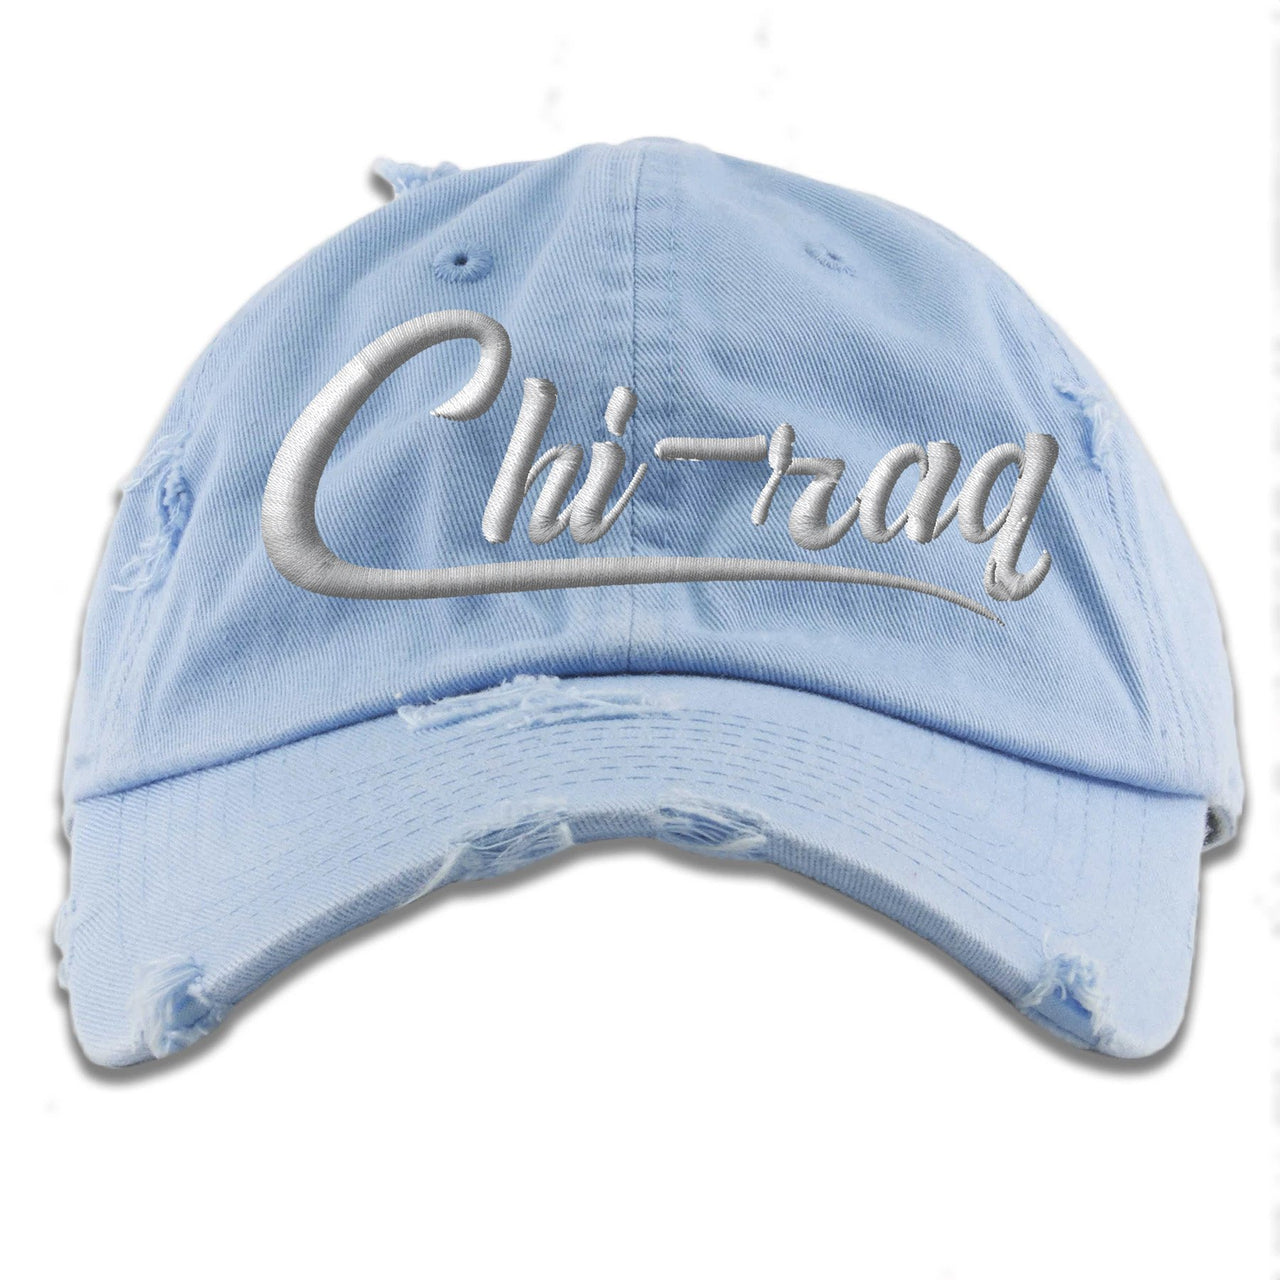 UNC Low 1s Distressed Dad Hat | Chiraq, Light Blue